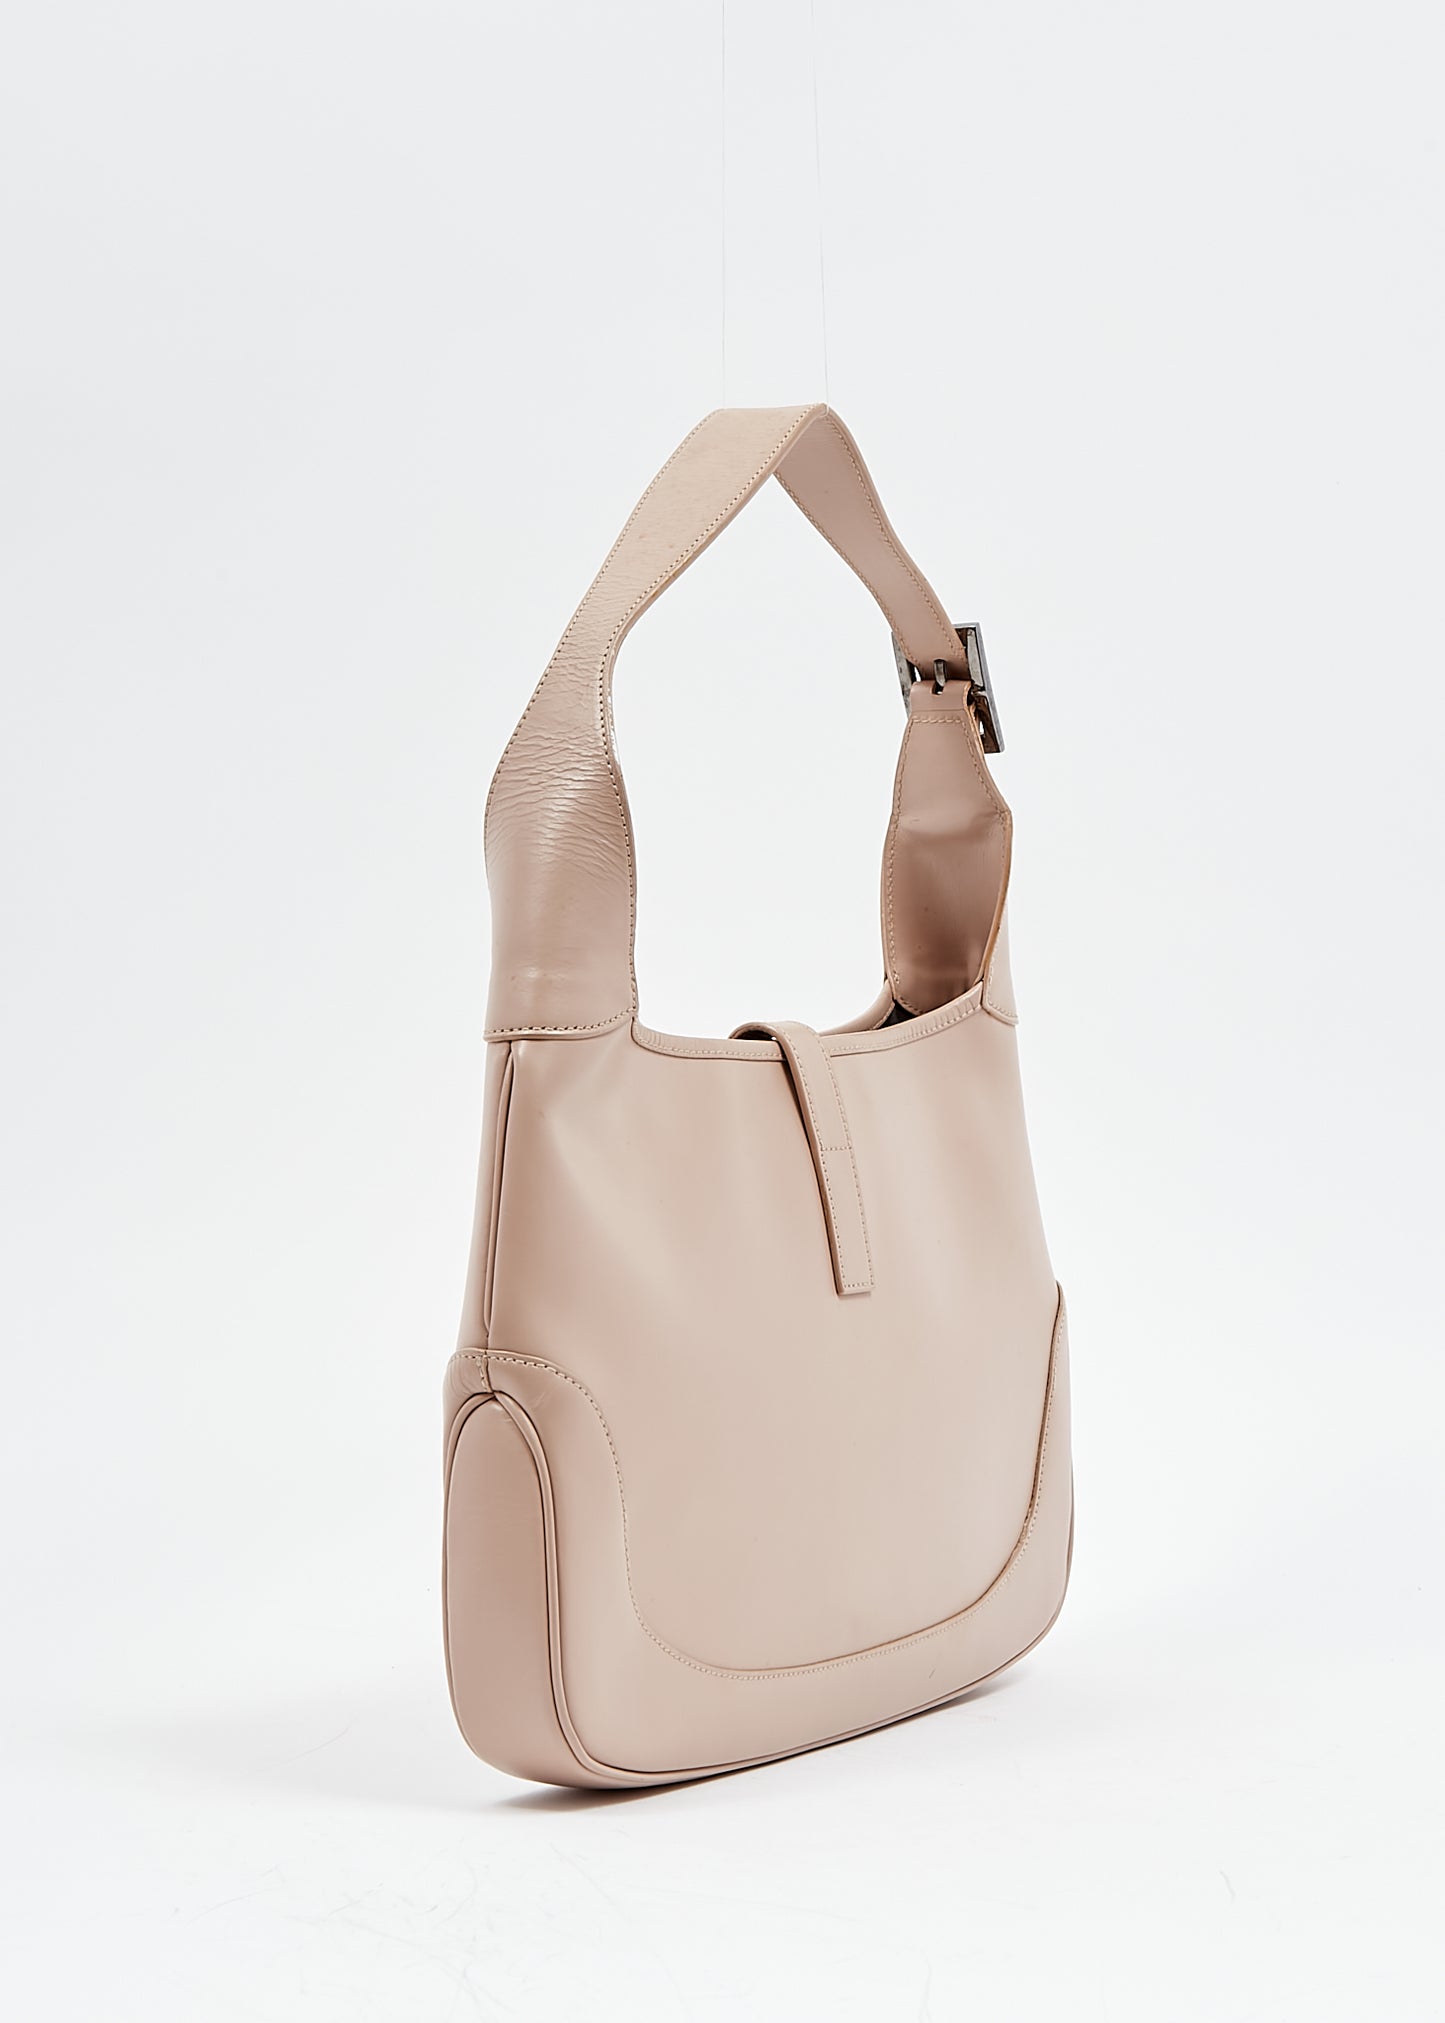 Gucci Beige Leather Small Jackie Shoulder Bag